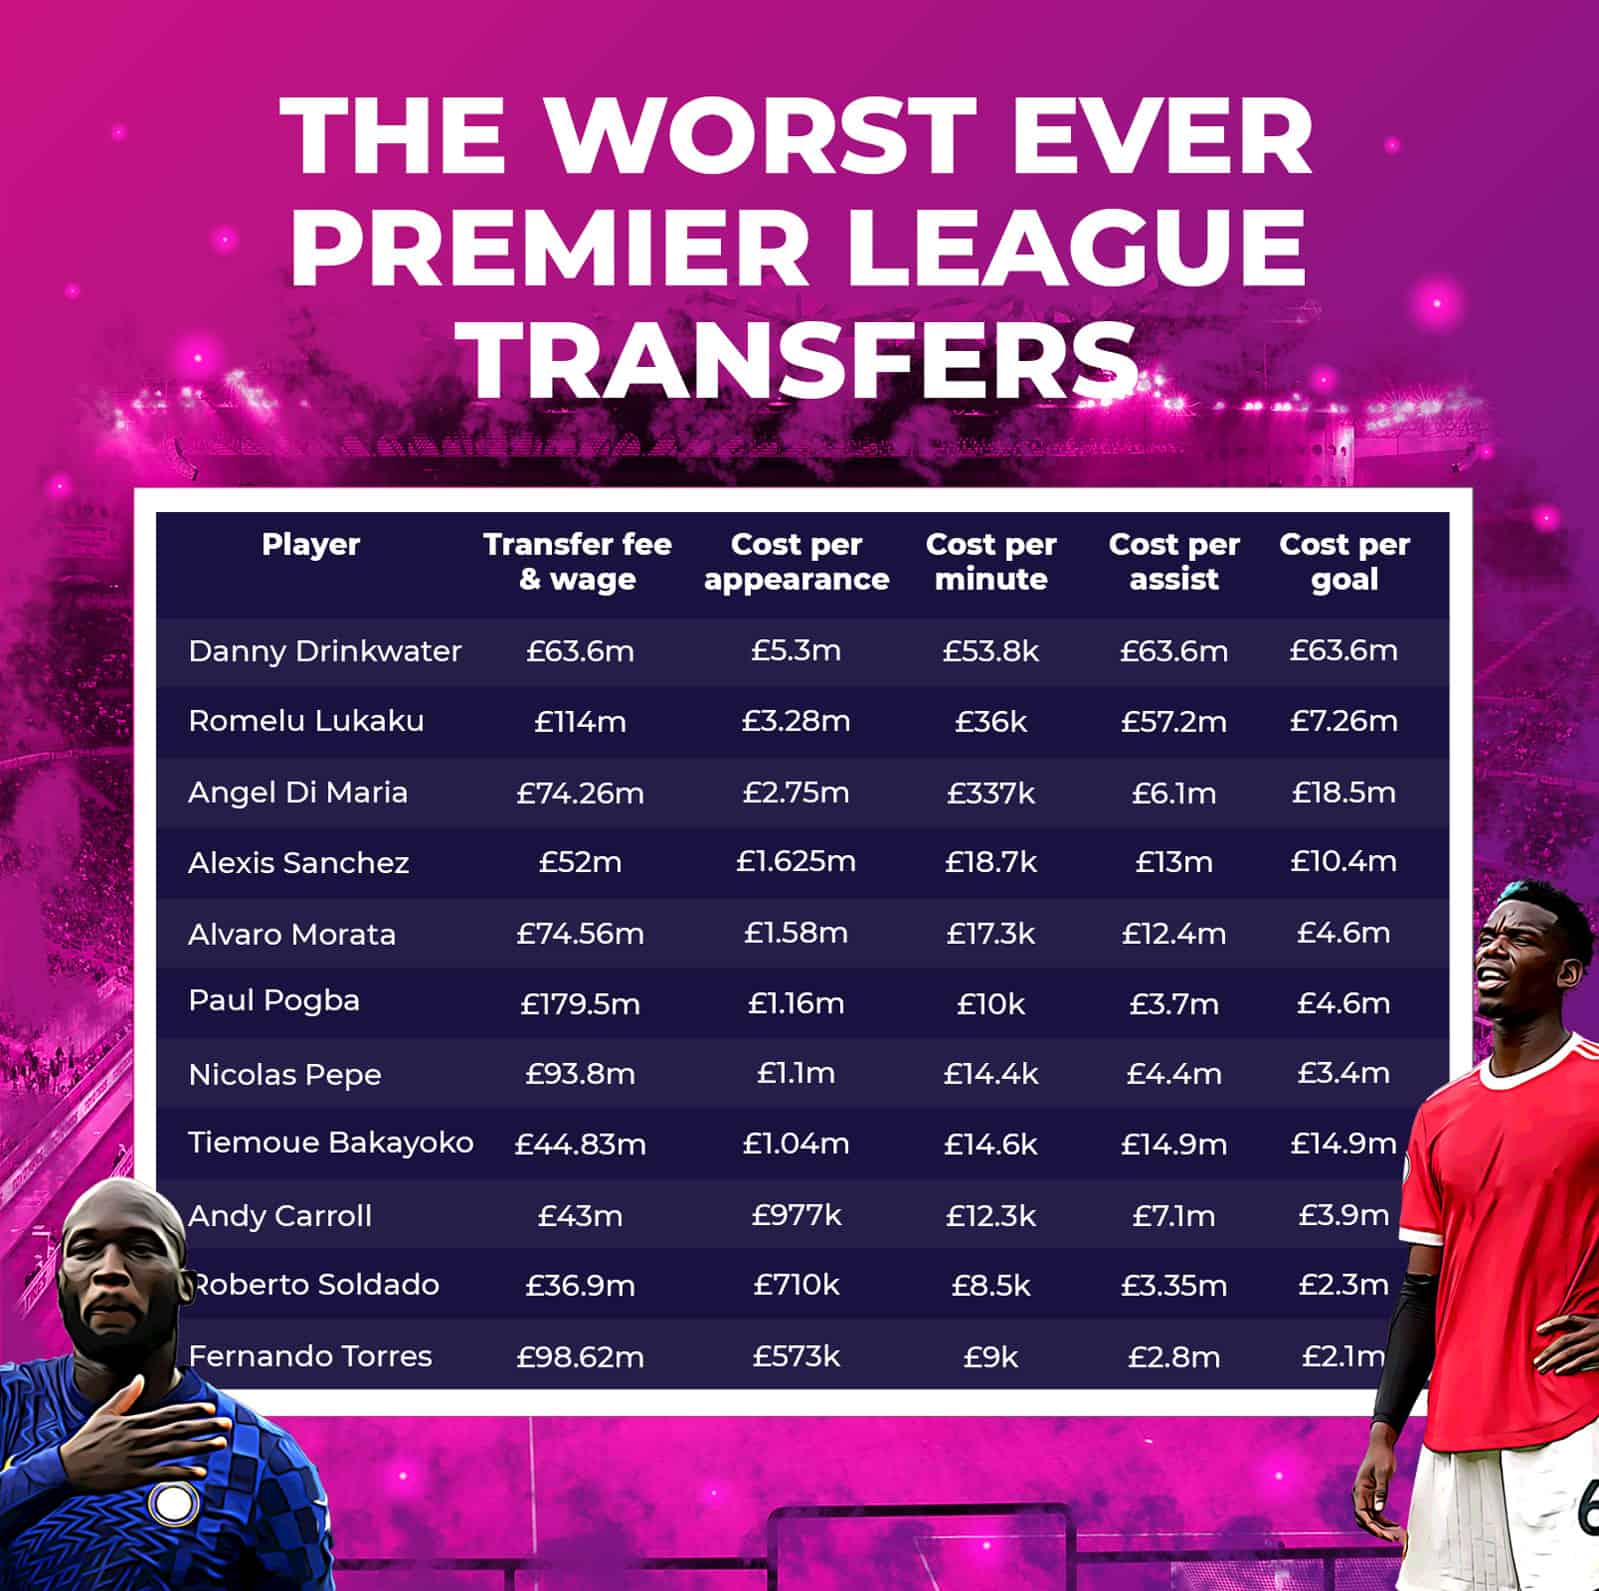 The worst ever premier league transfers